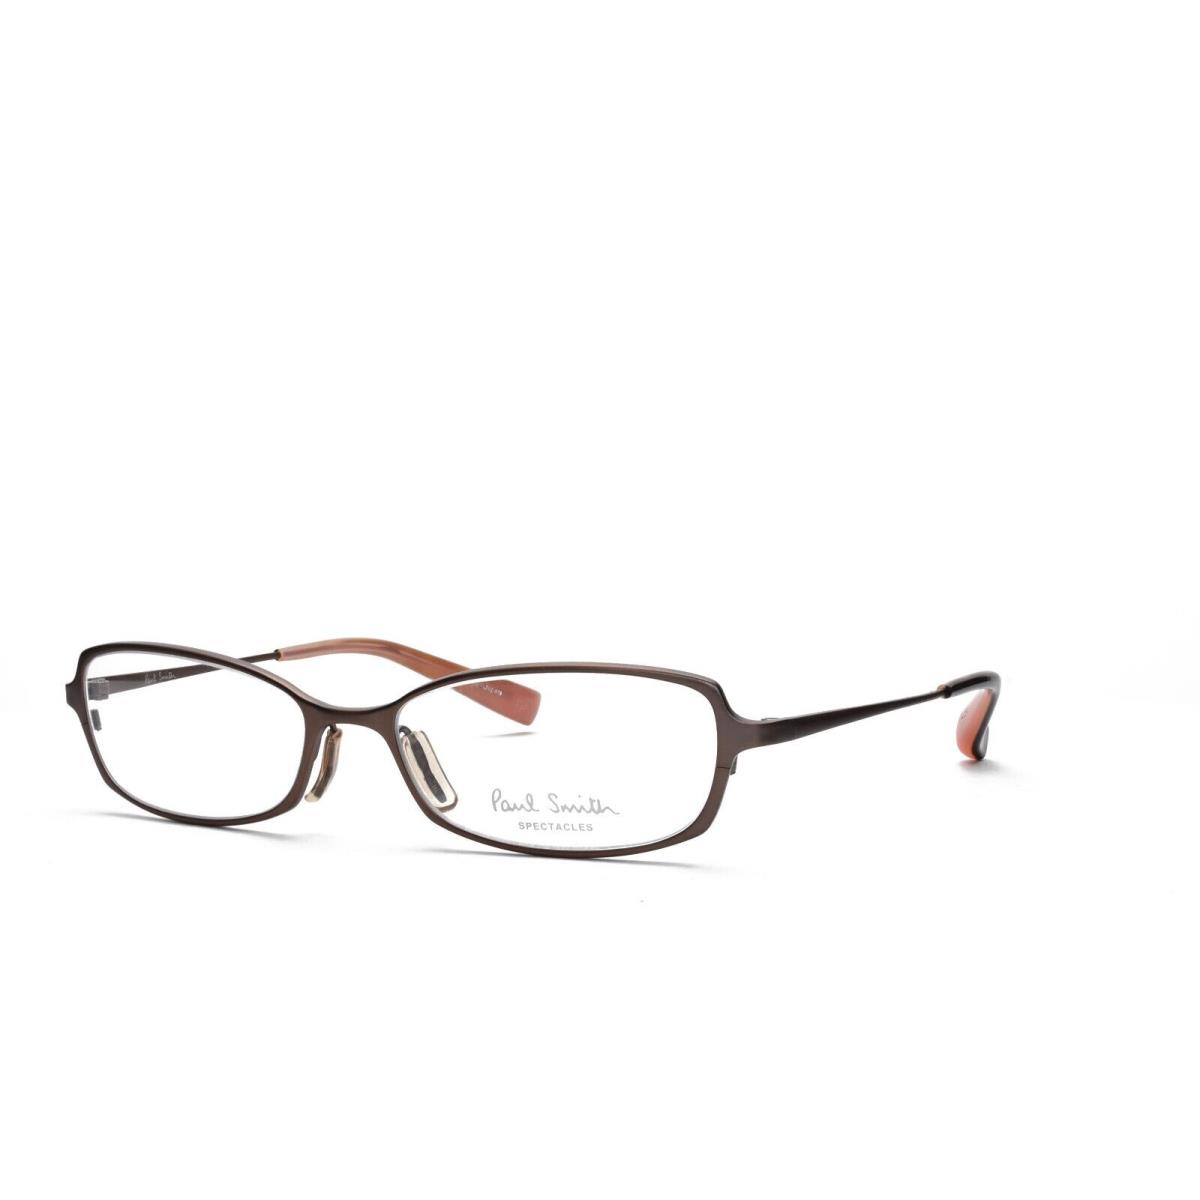 Paul Smith 188 MC 51-16-130 Brown Vtg Vintage Eyeglasses Frames Titanium